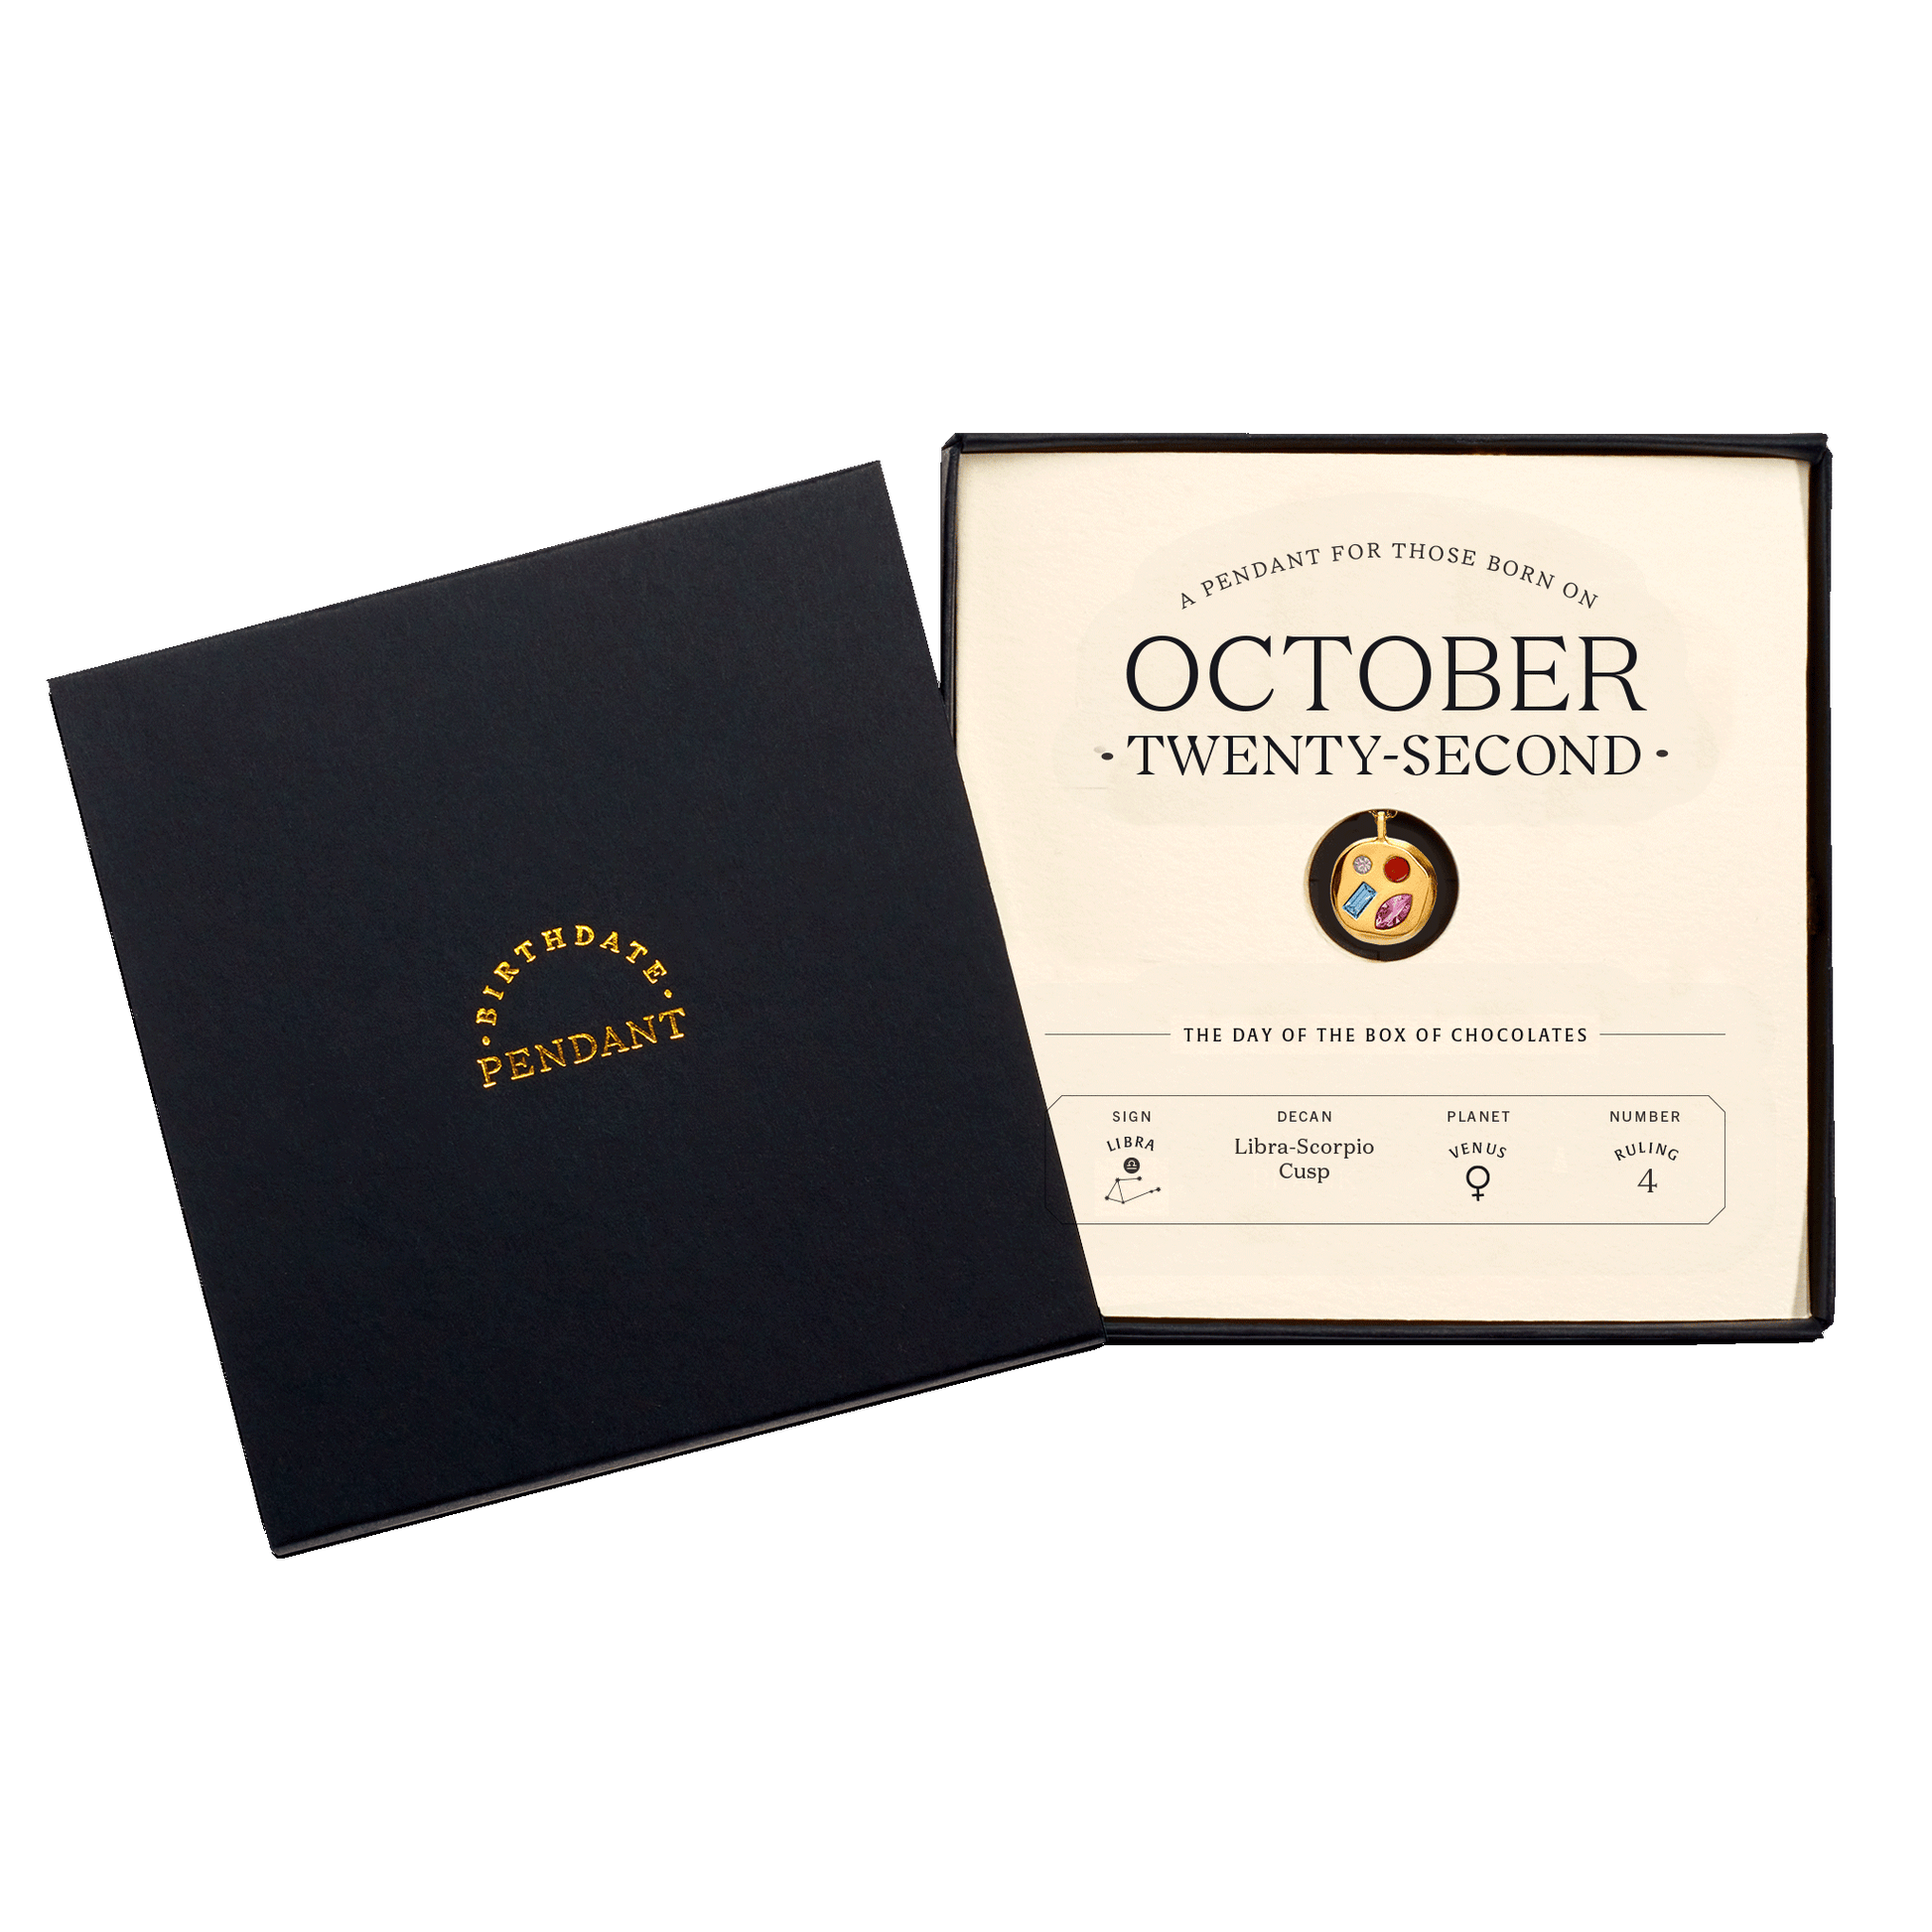 The October Twenty-Second Pendant inside its box